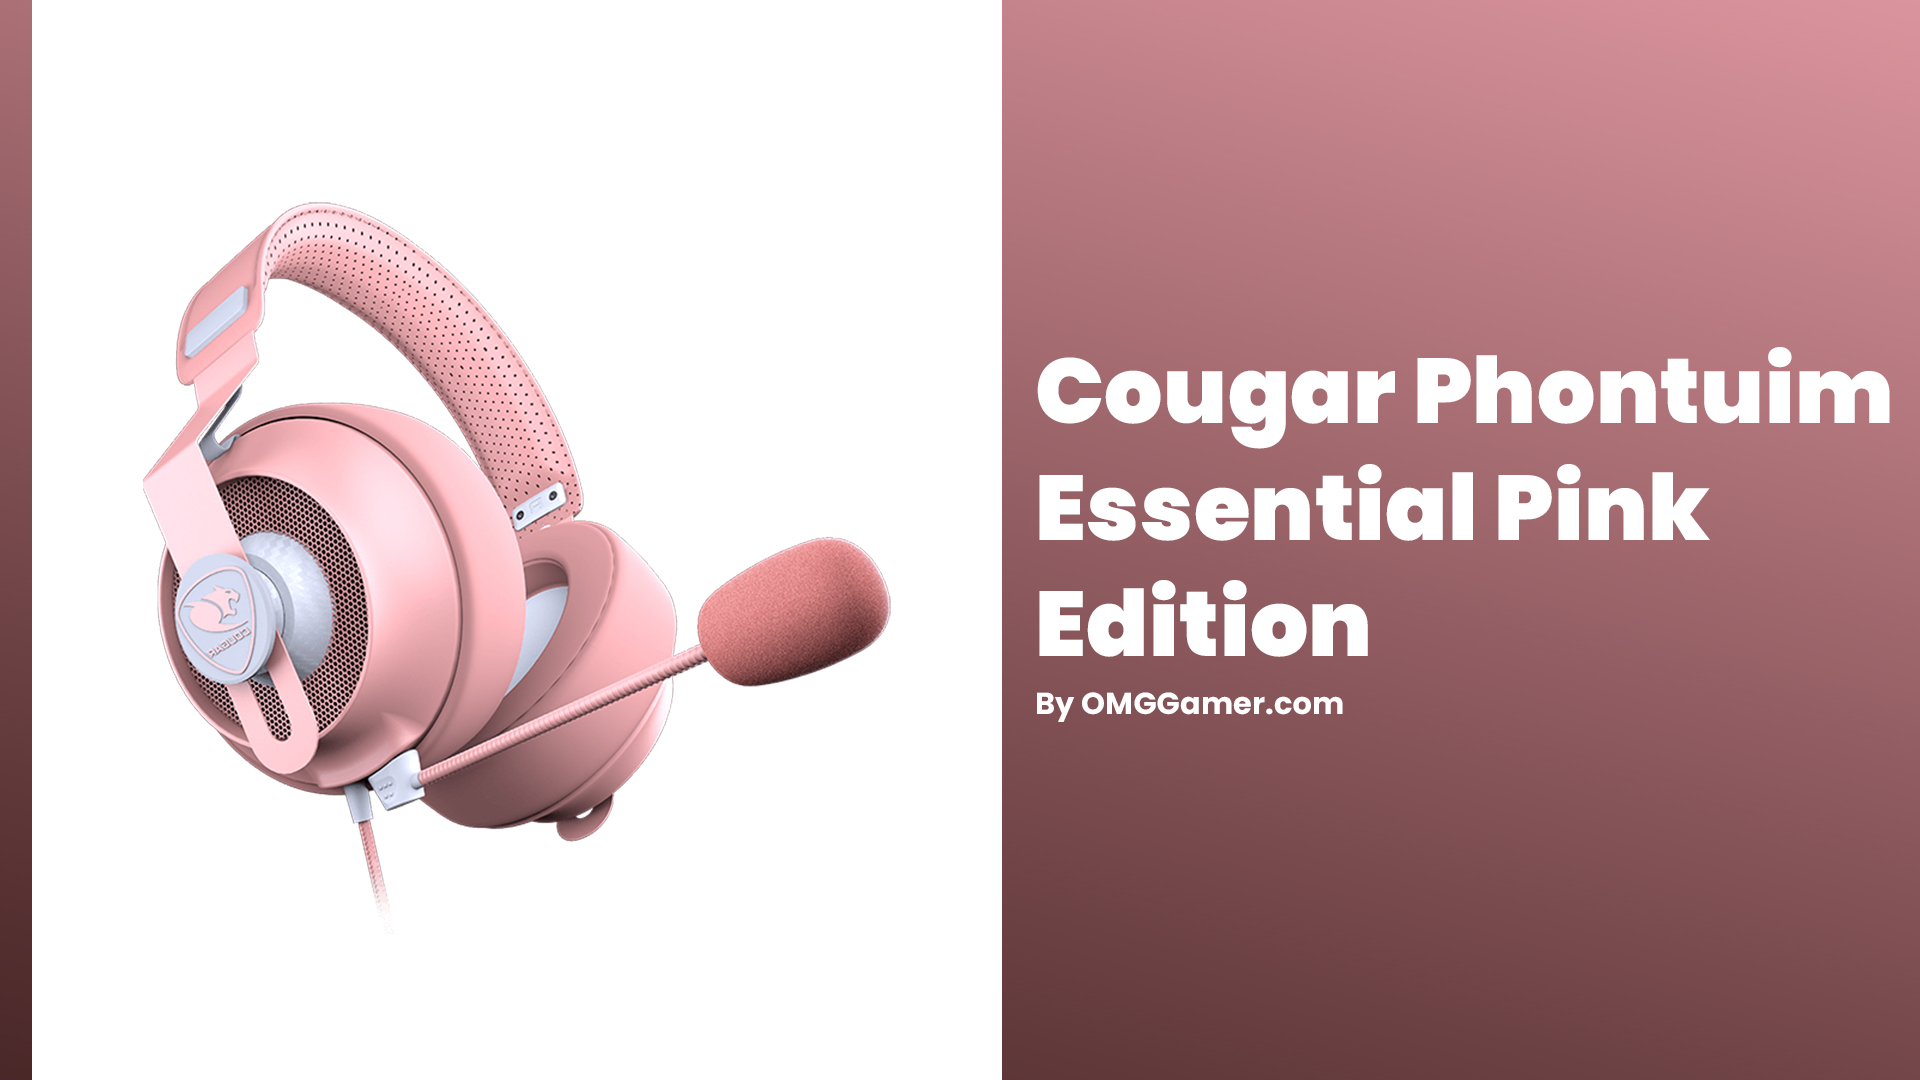 Cougar Phontuim Essential Pink Edition Gamer Girl Headset